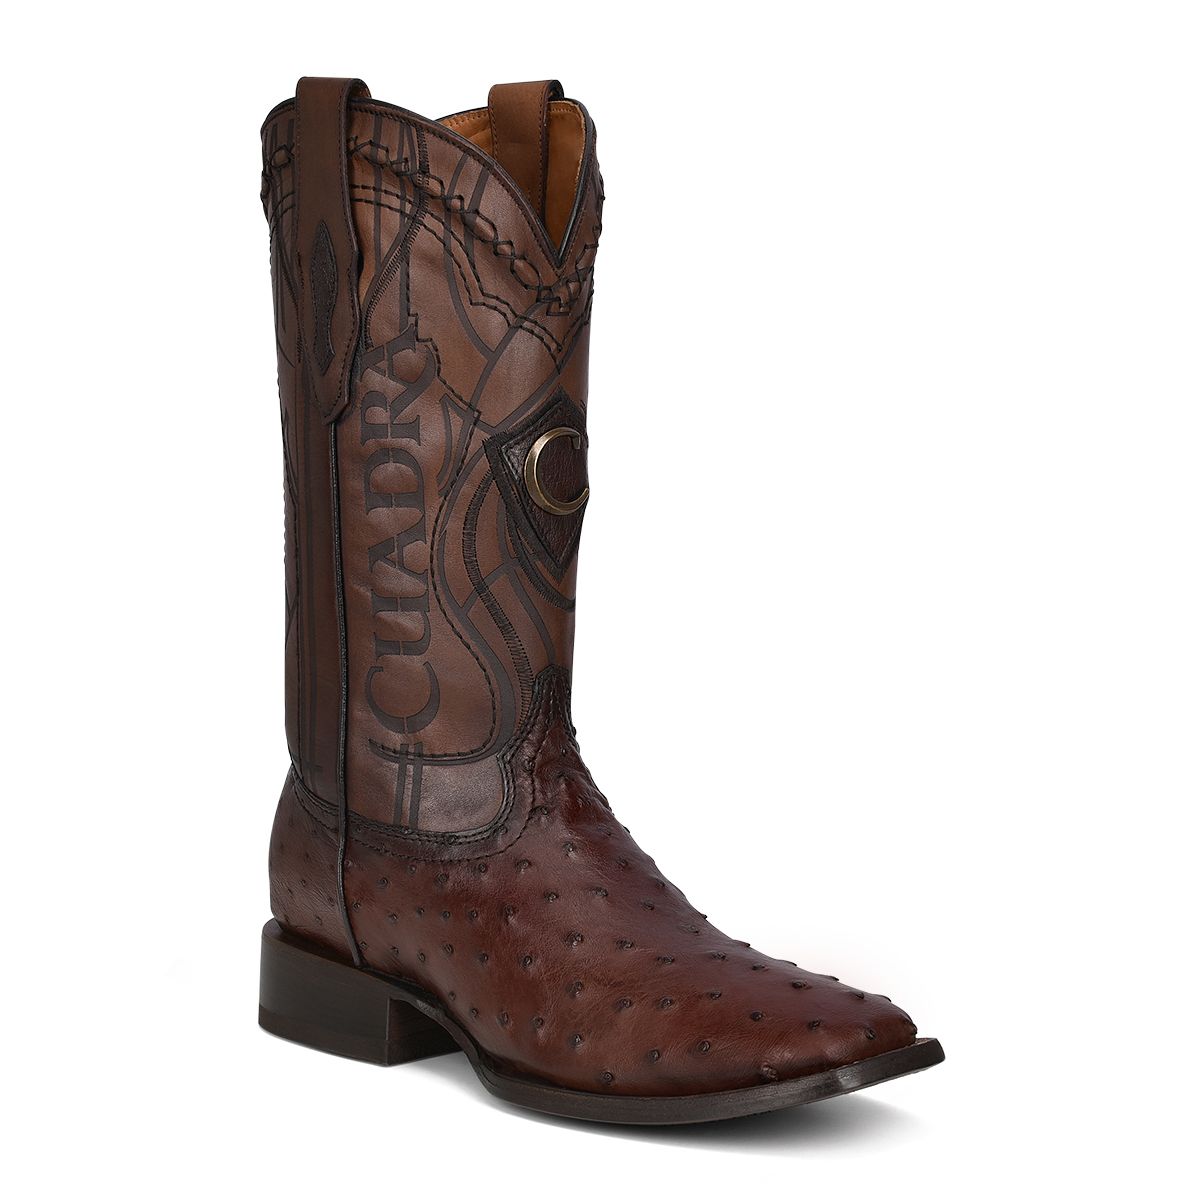 3Z1OA1 - Cuadra chocolate cowboy rodeo ostrich leather boots for men-CUADRA-Kuet-Cuadra-Boots